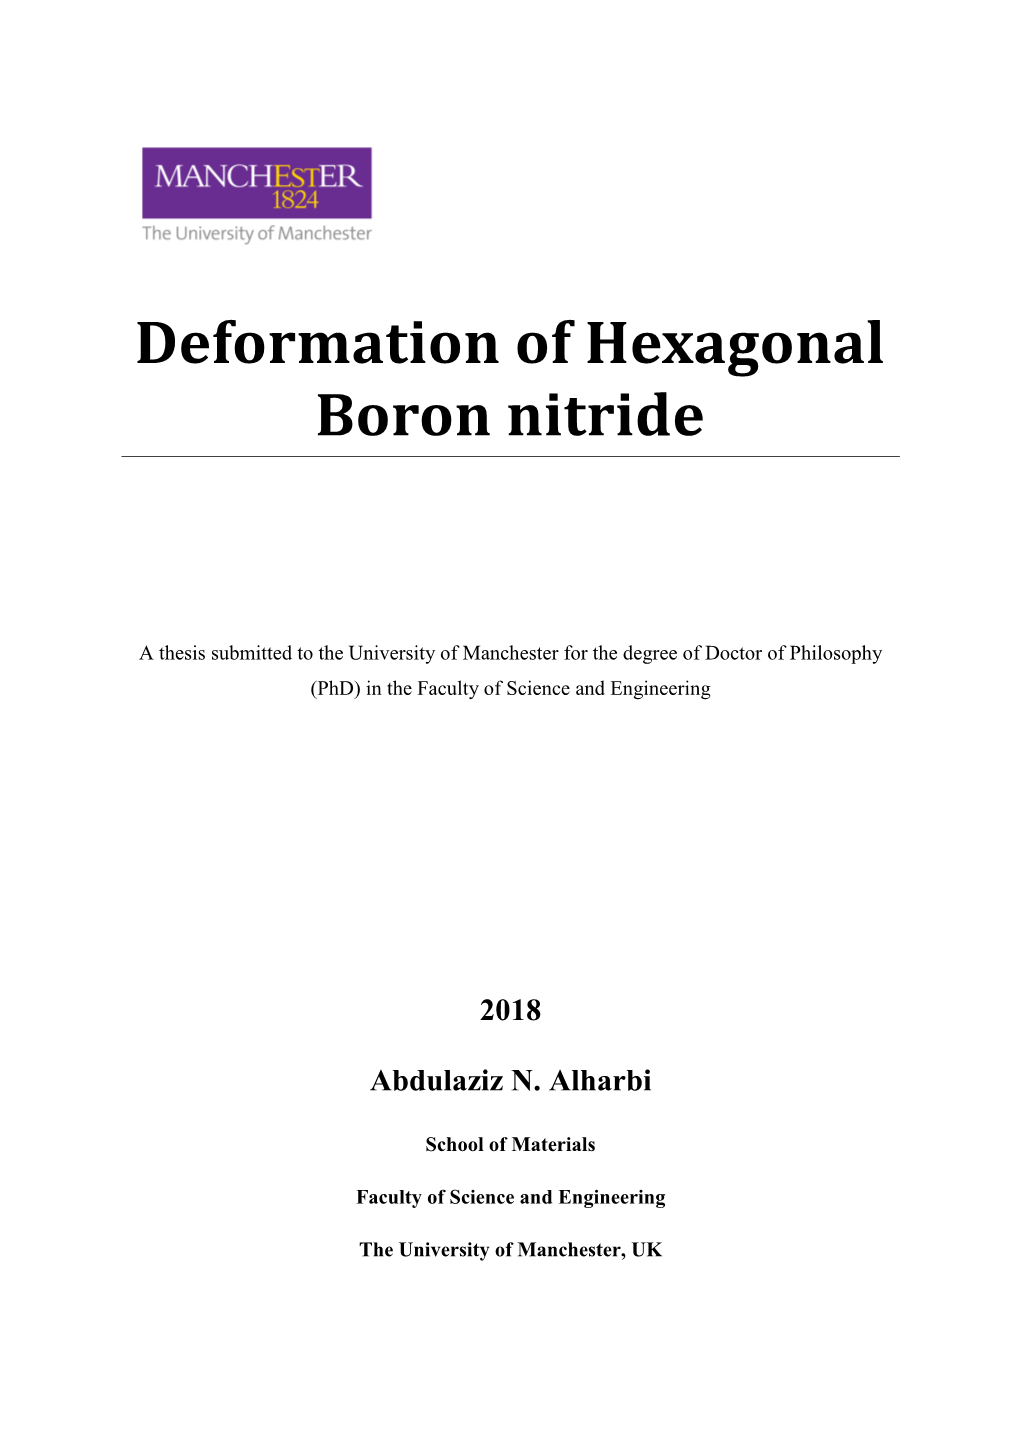 Deformation of Hexagonal Boron Nitride